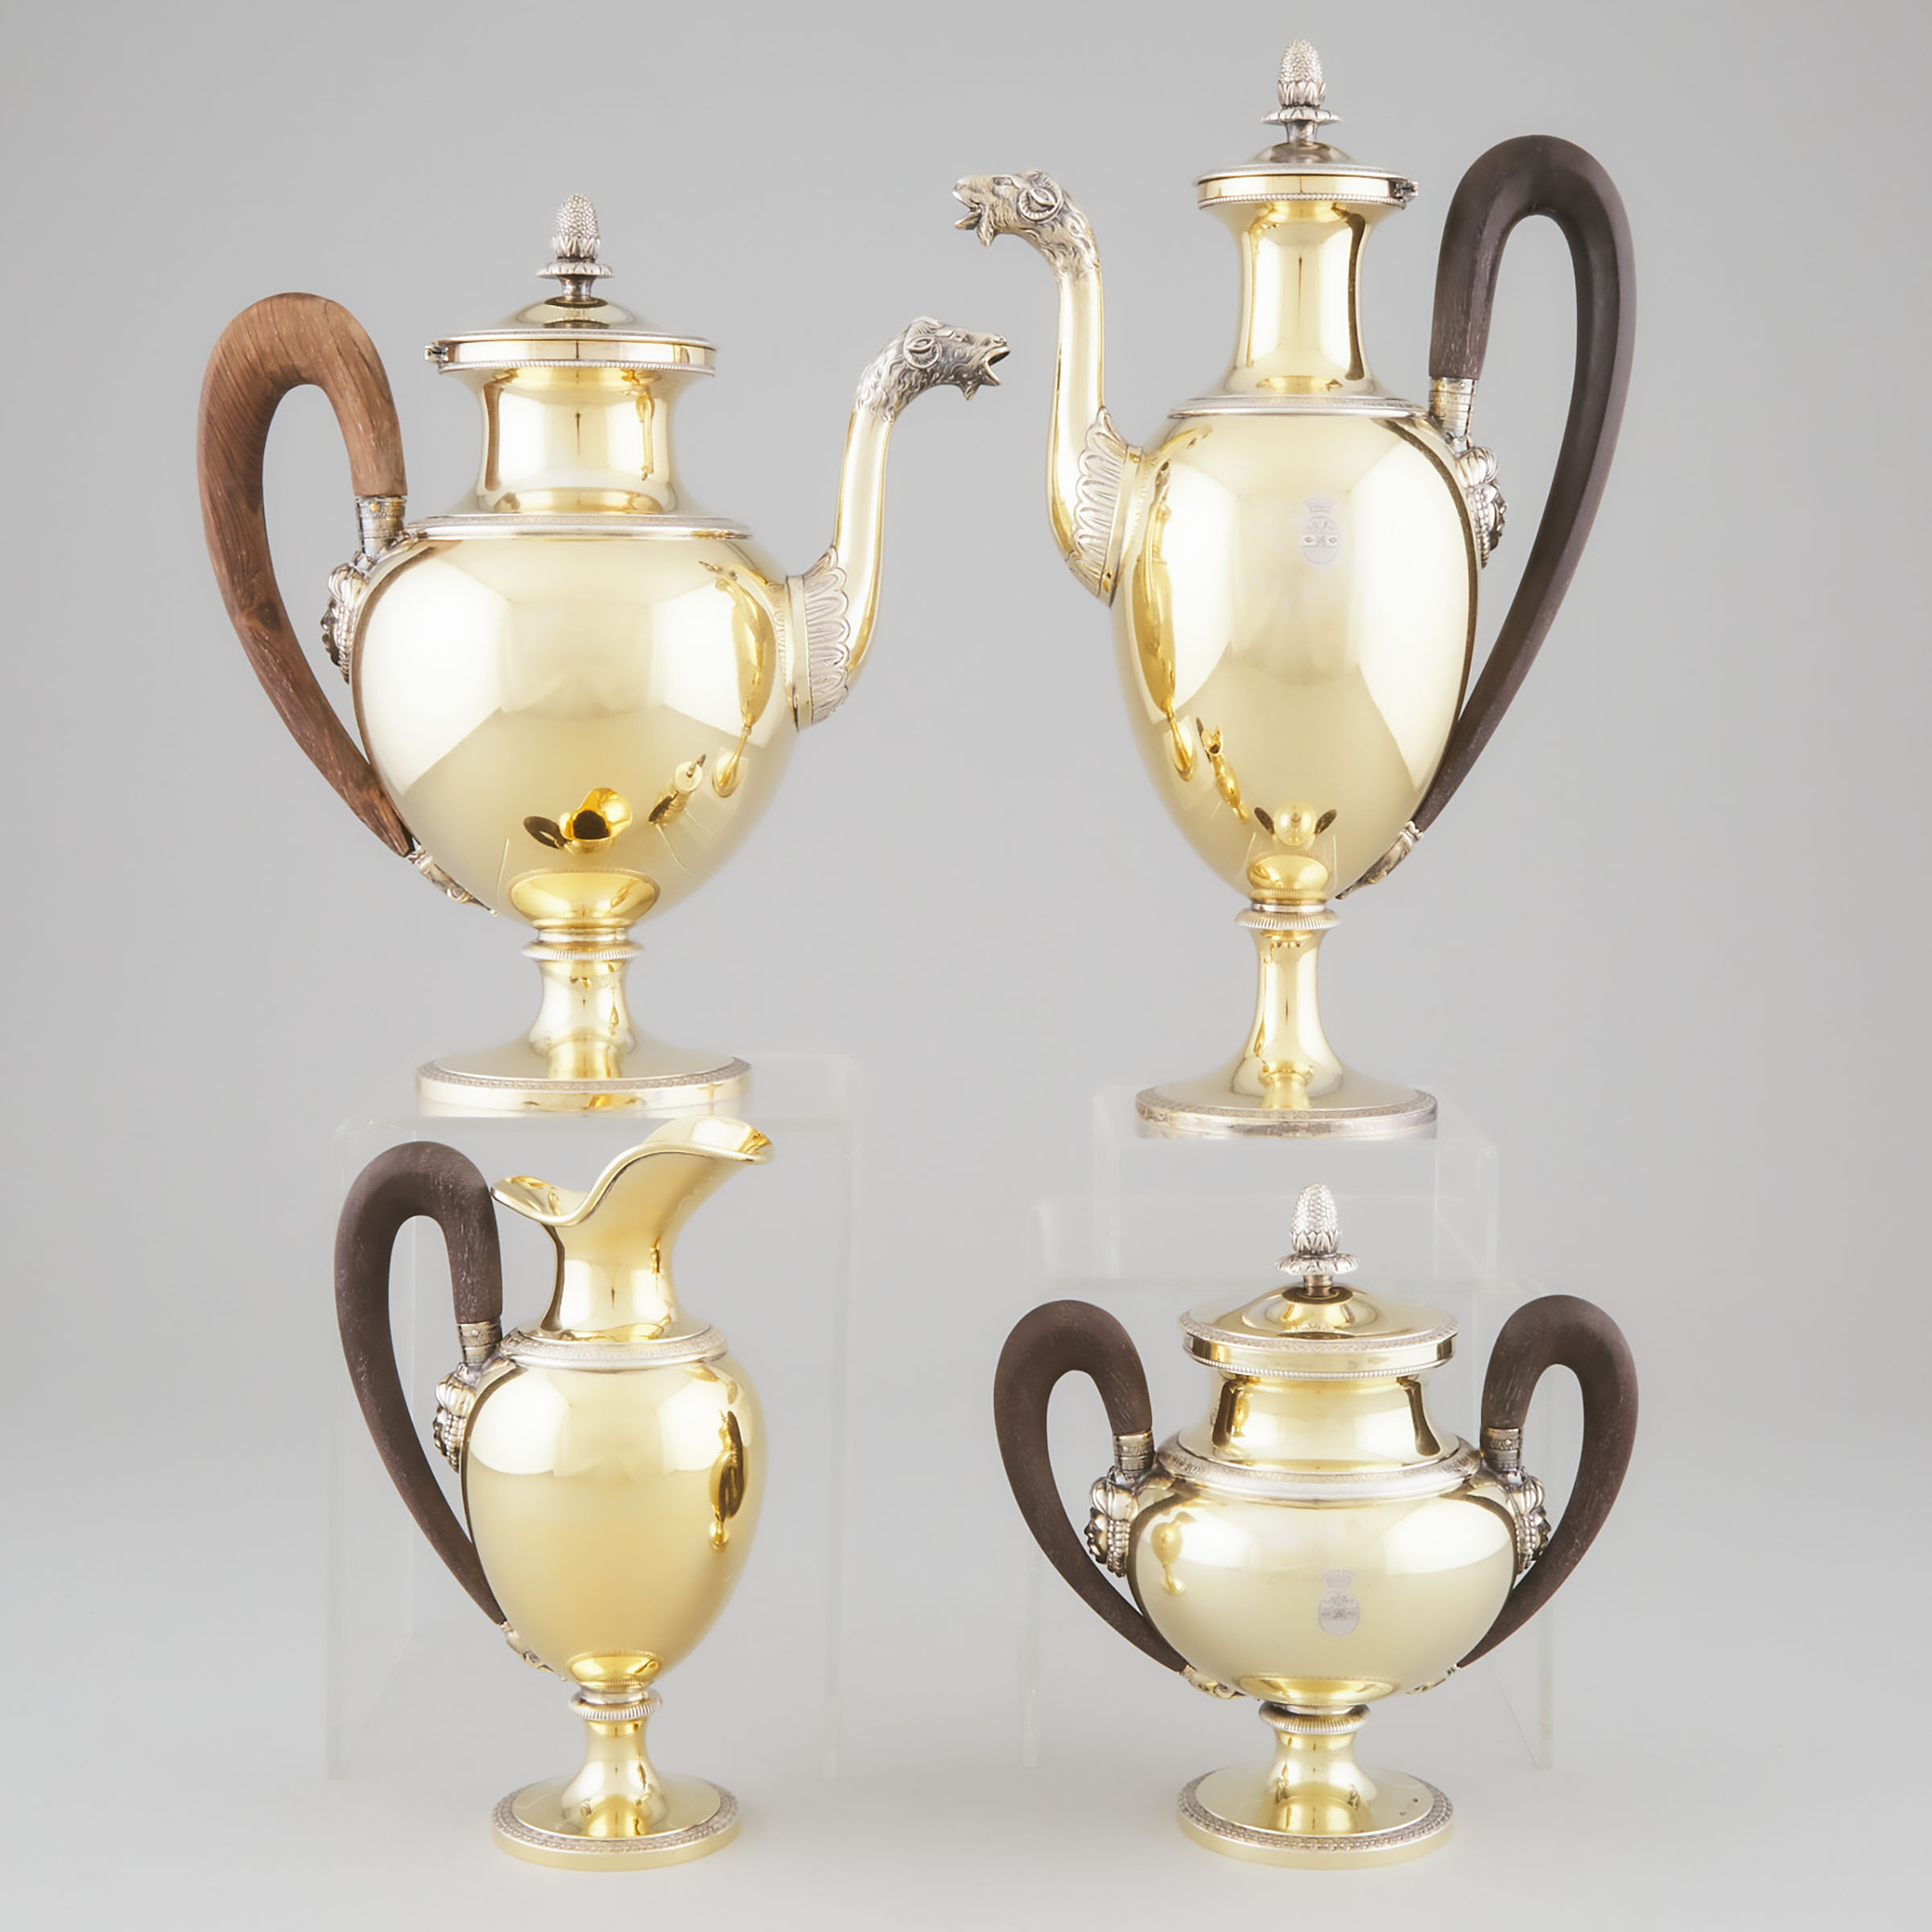 Italian Silver-Gilt Tea and Coffee Service, 20th century